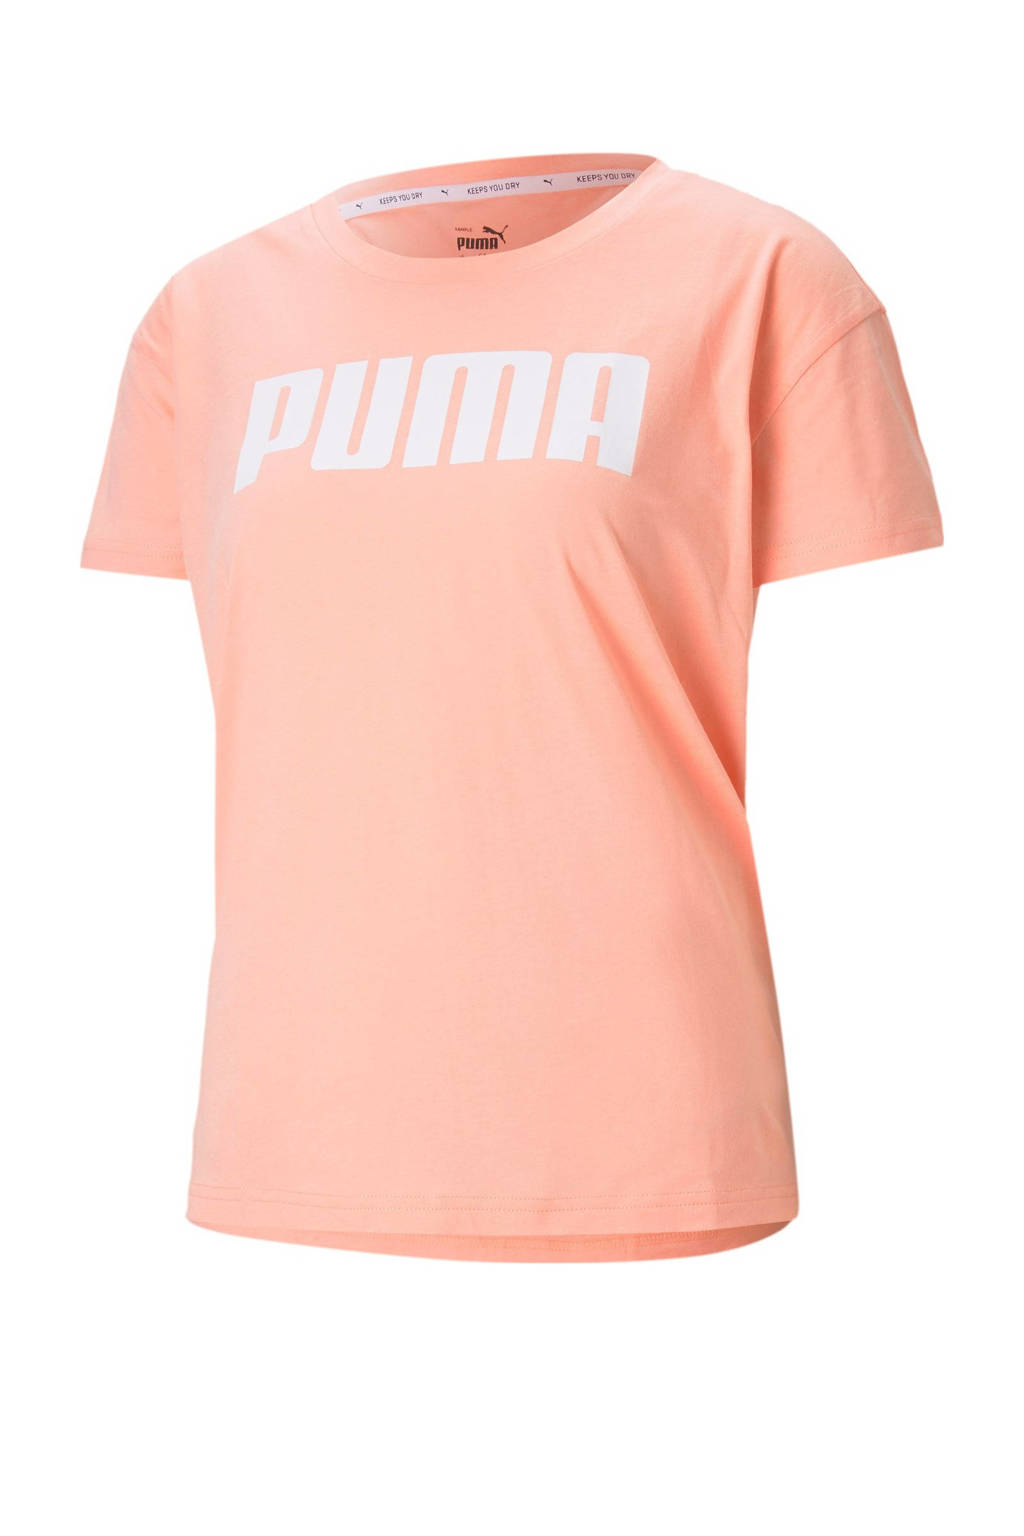 Puma T-shirt roze, Roze